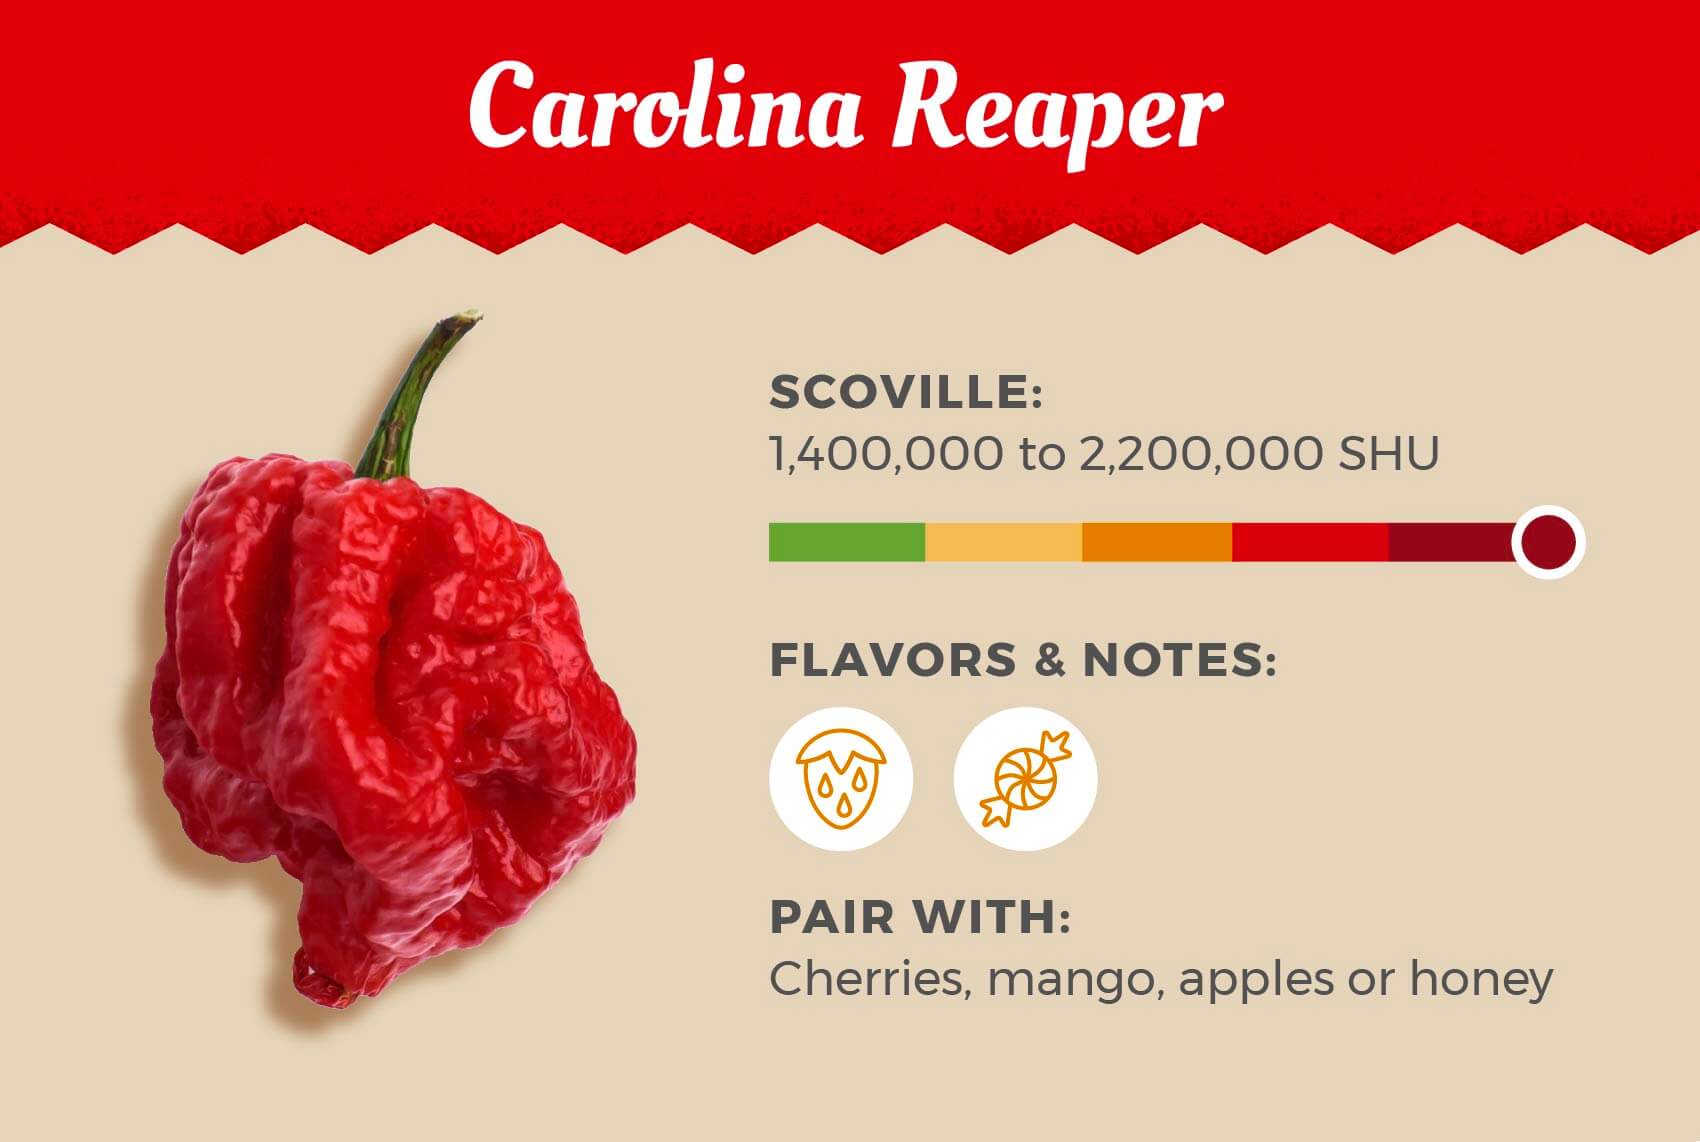 Pepper на русском языке. Carolina Reaper шкала Сковилла.